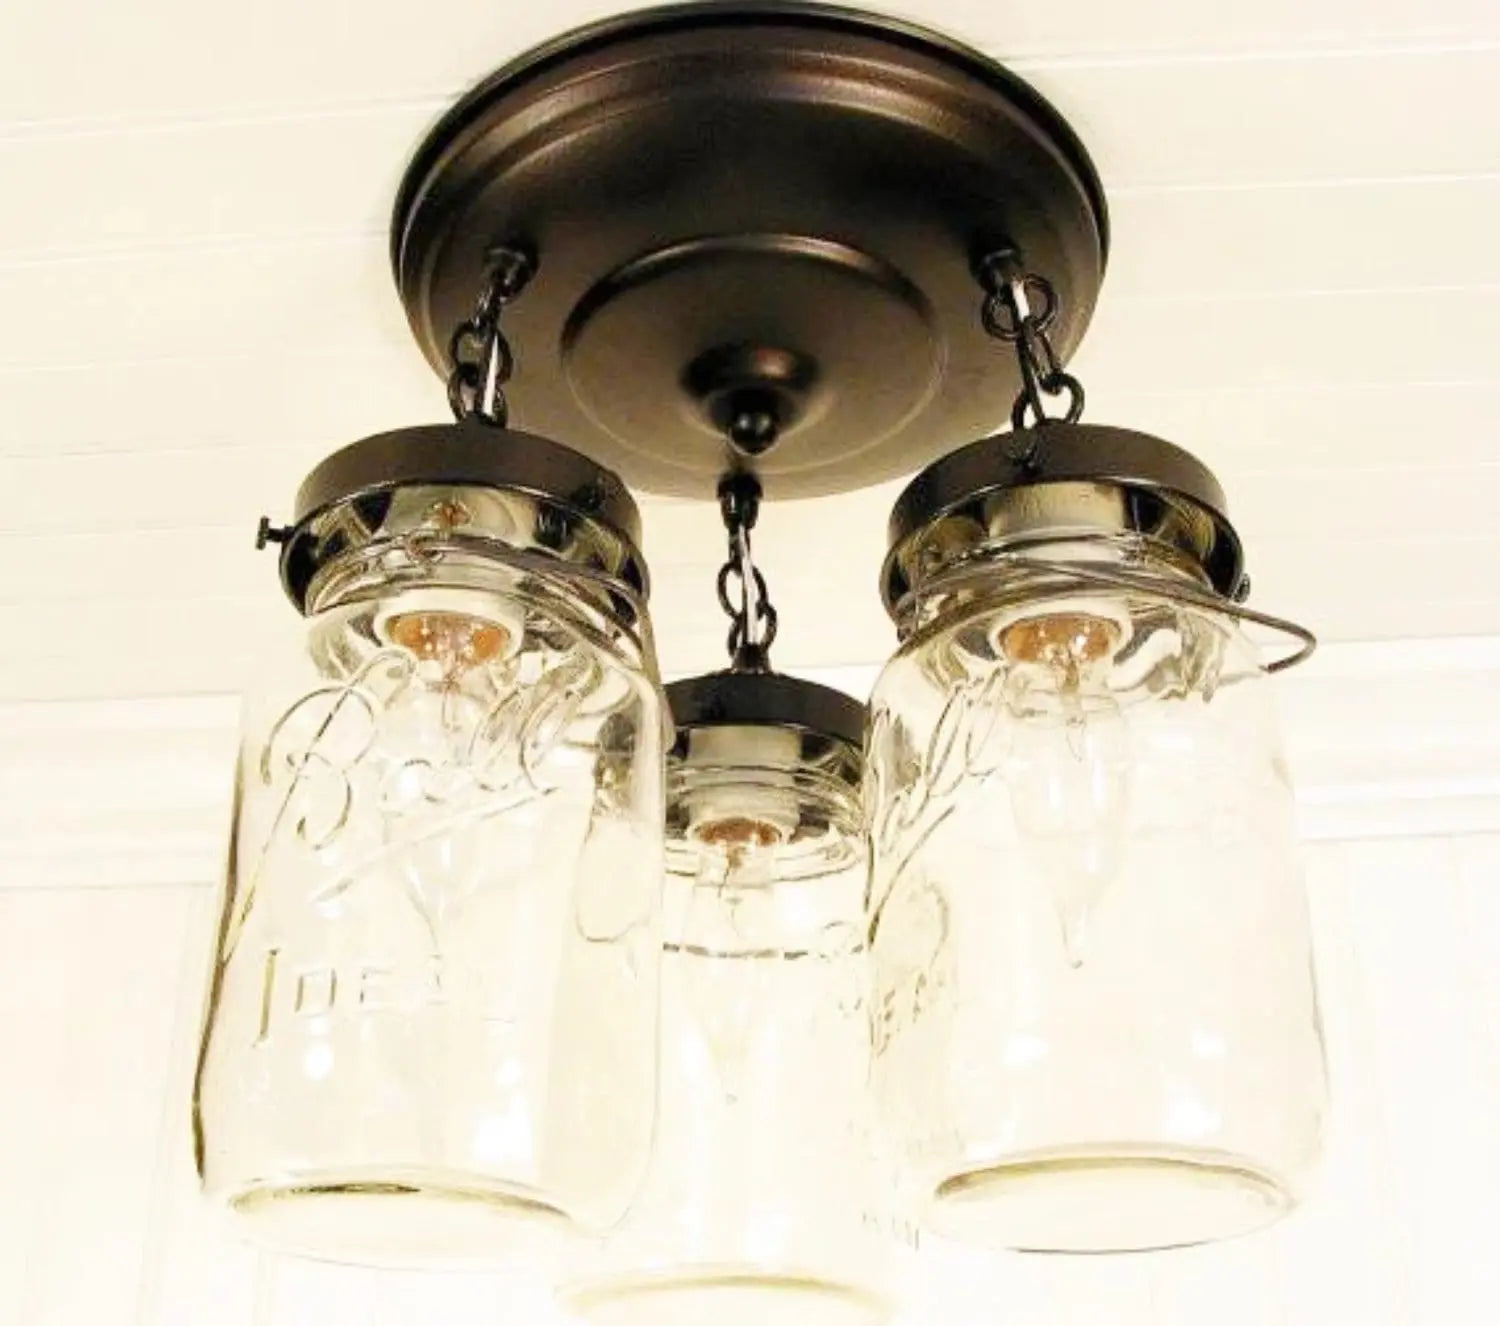 Mason Jar Light Fixture - Vintage Quart Trio - The Lamp Goods